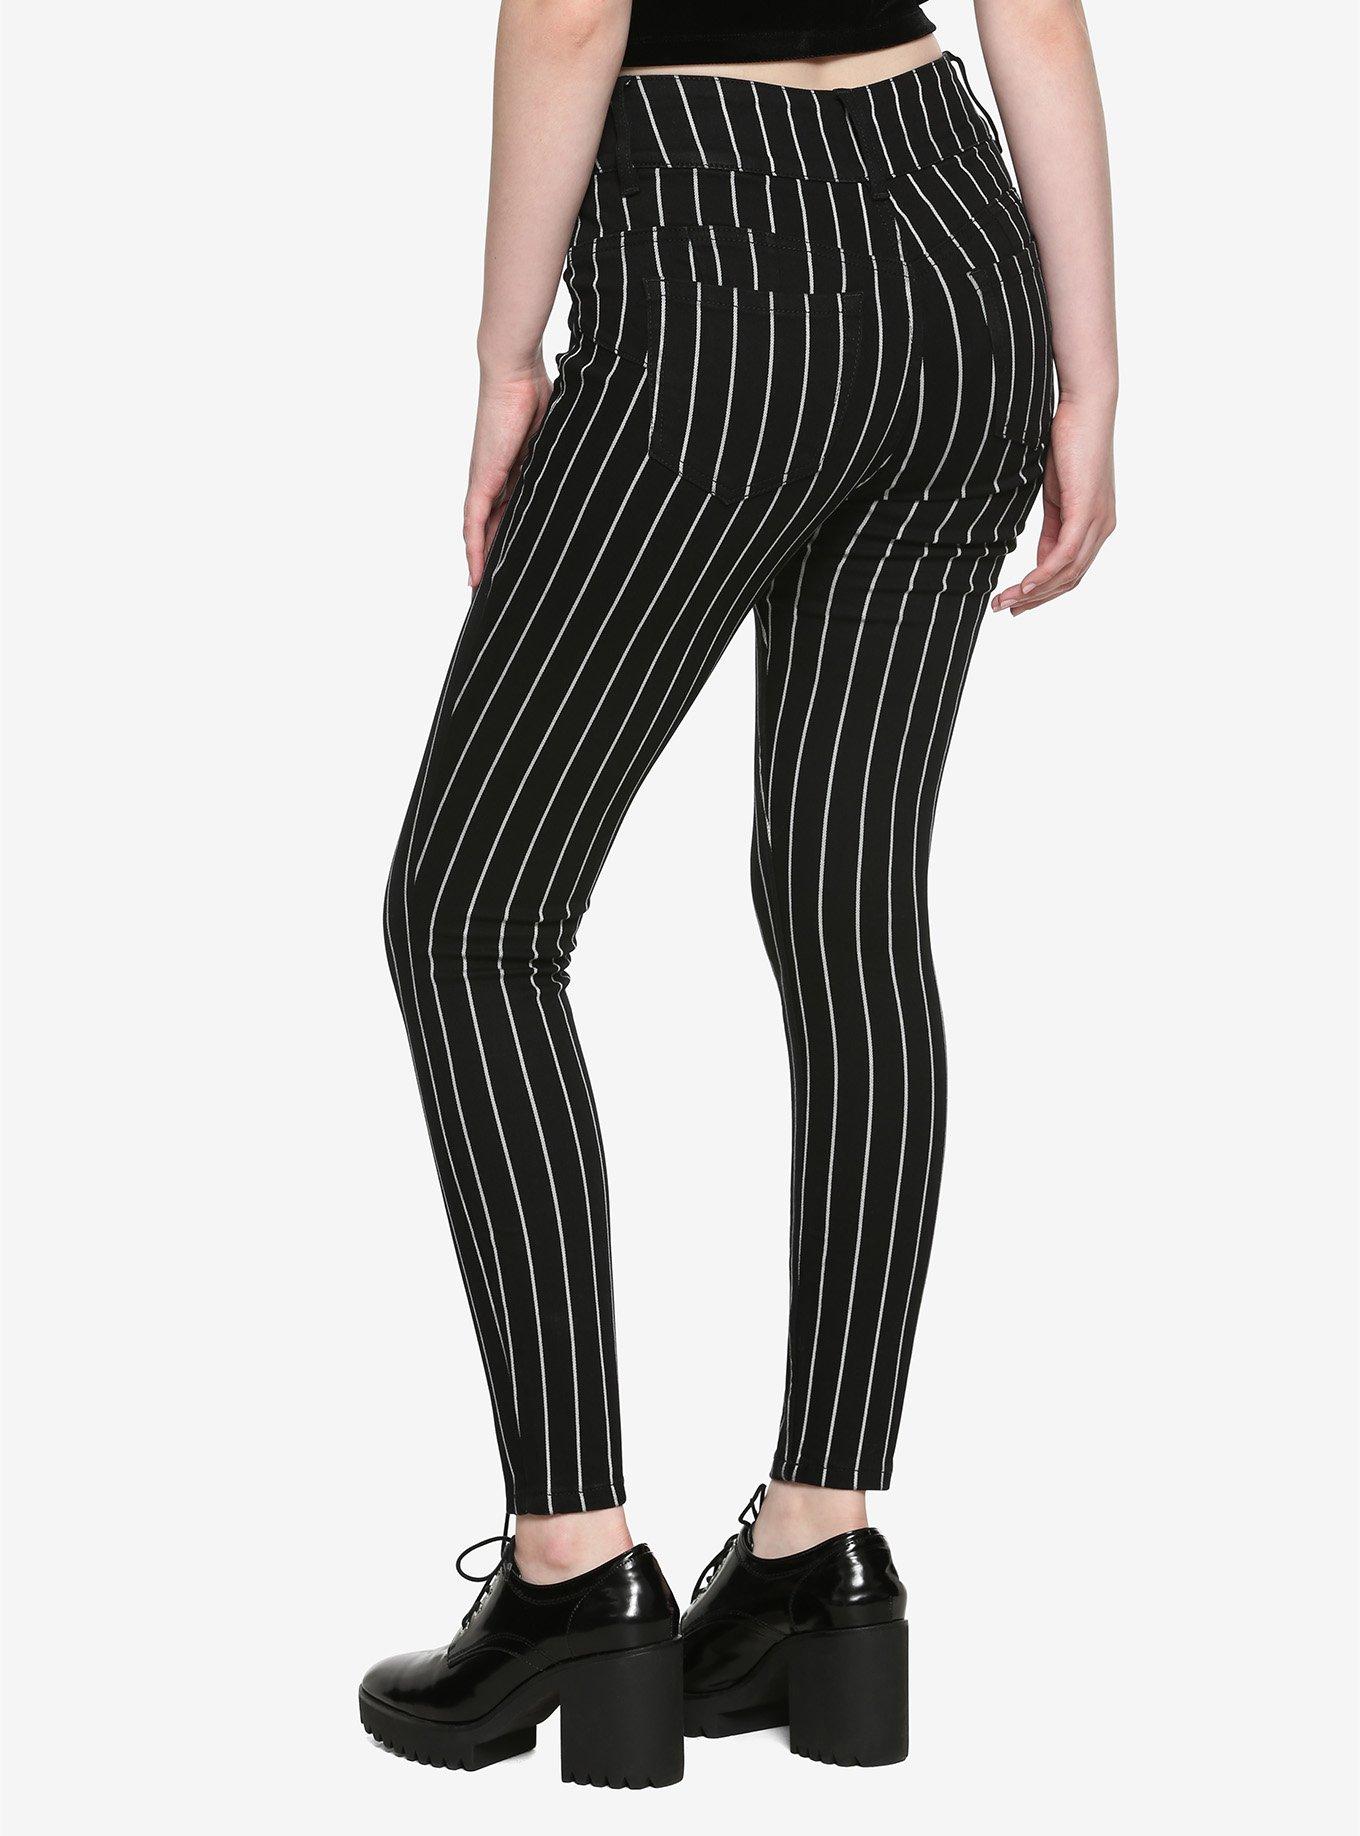 HT Denim Black & White Pinstripe Hi-Rise Super Skinny Jeans, STRIPE - WHITE, alternate